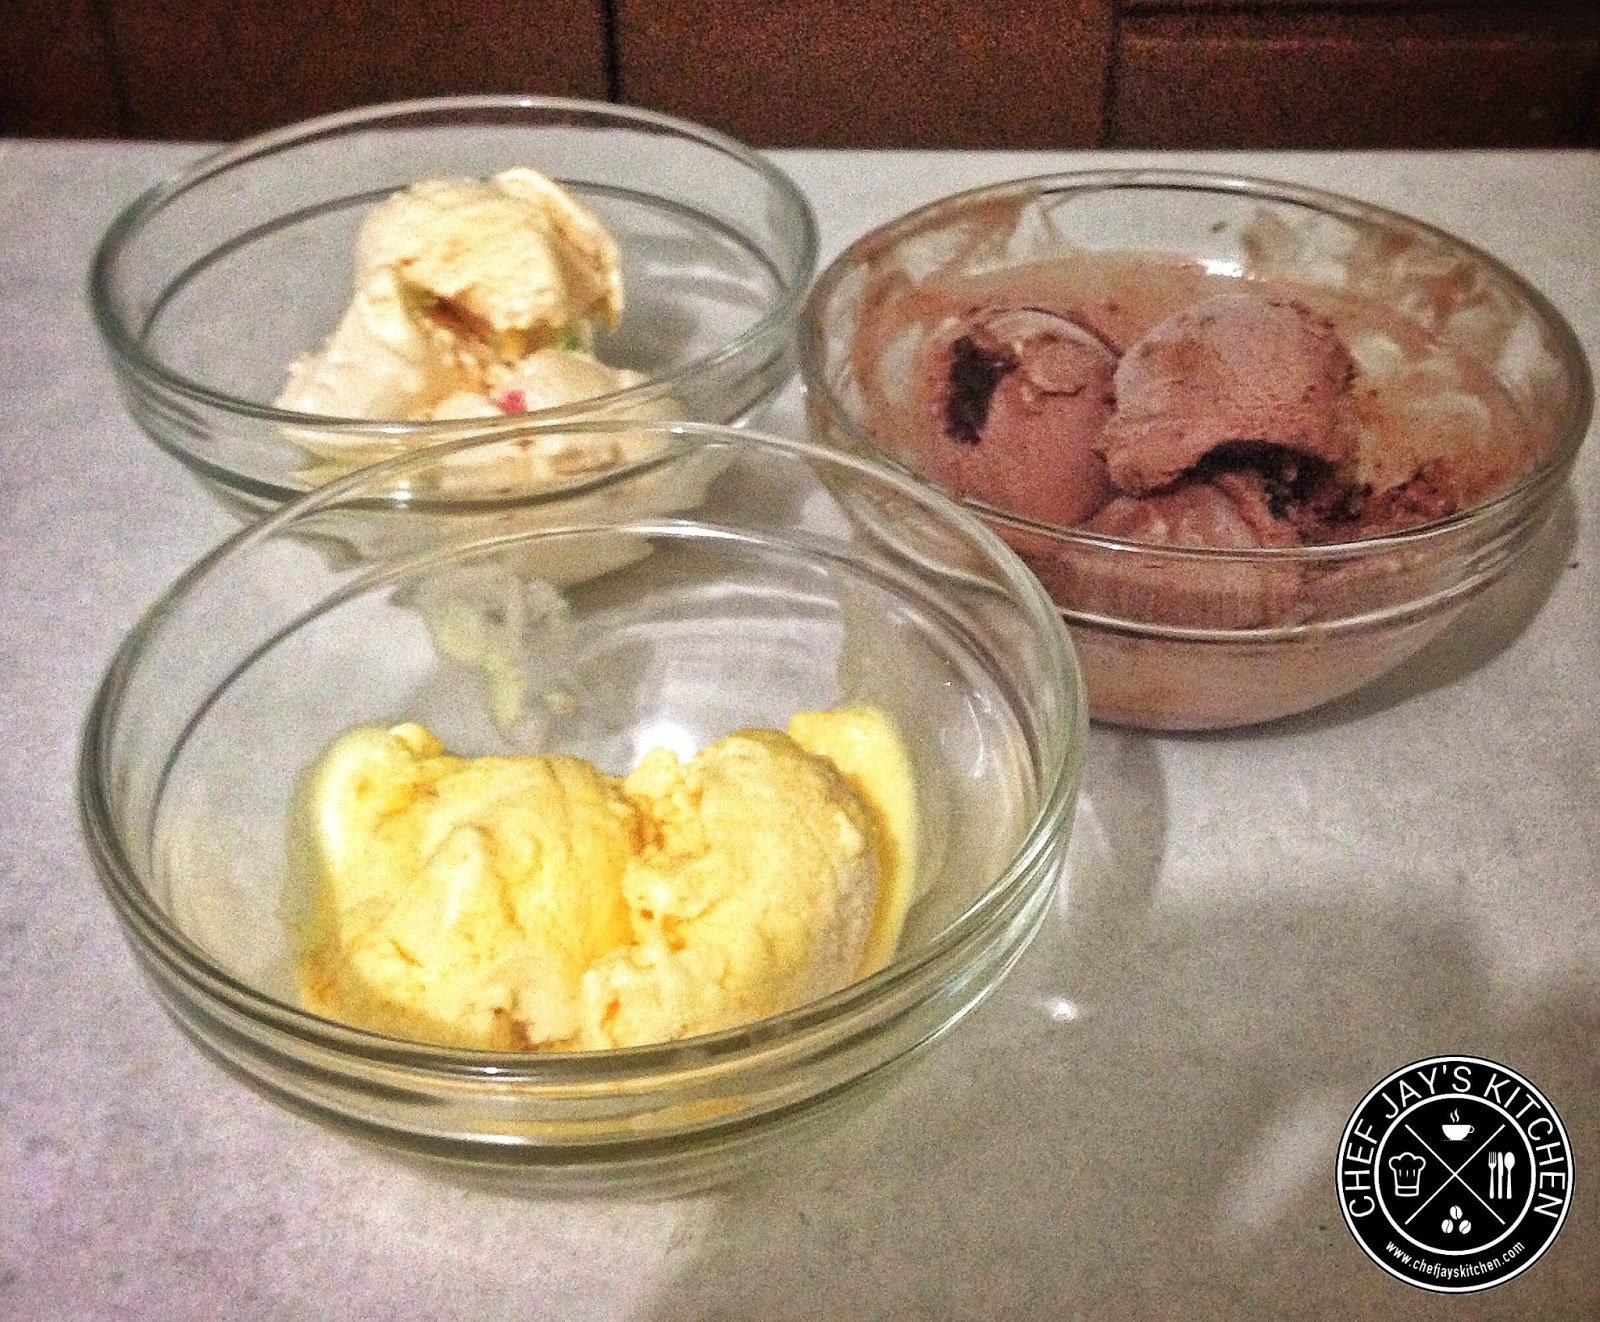 Selecta Ice Cream Flavors: Mais Con Quezo, Choco Almond Fudge, and Fruit Salad